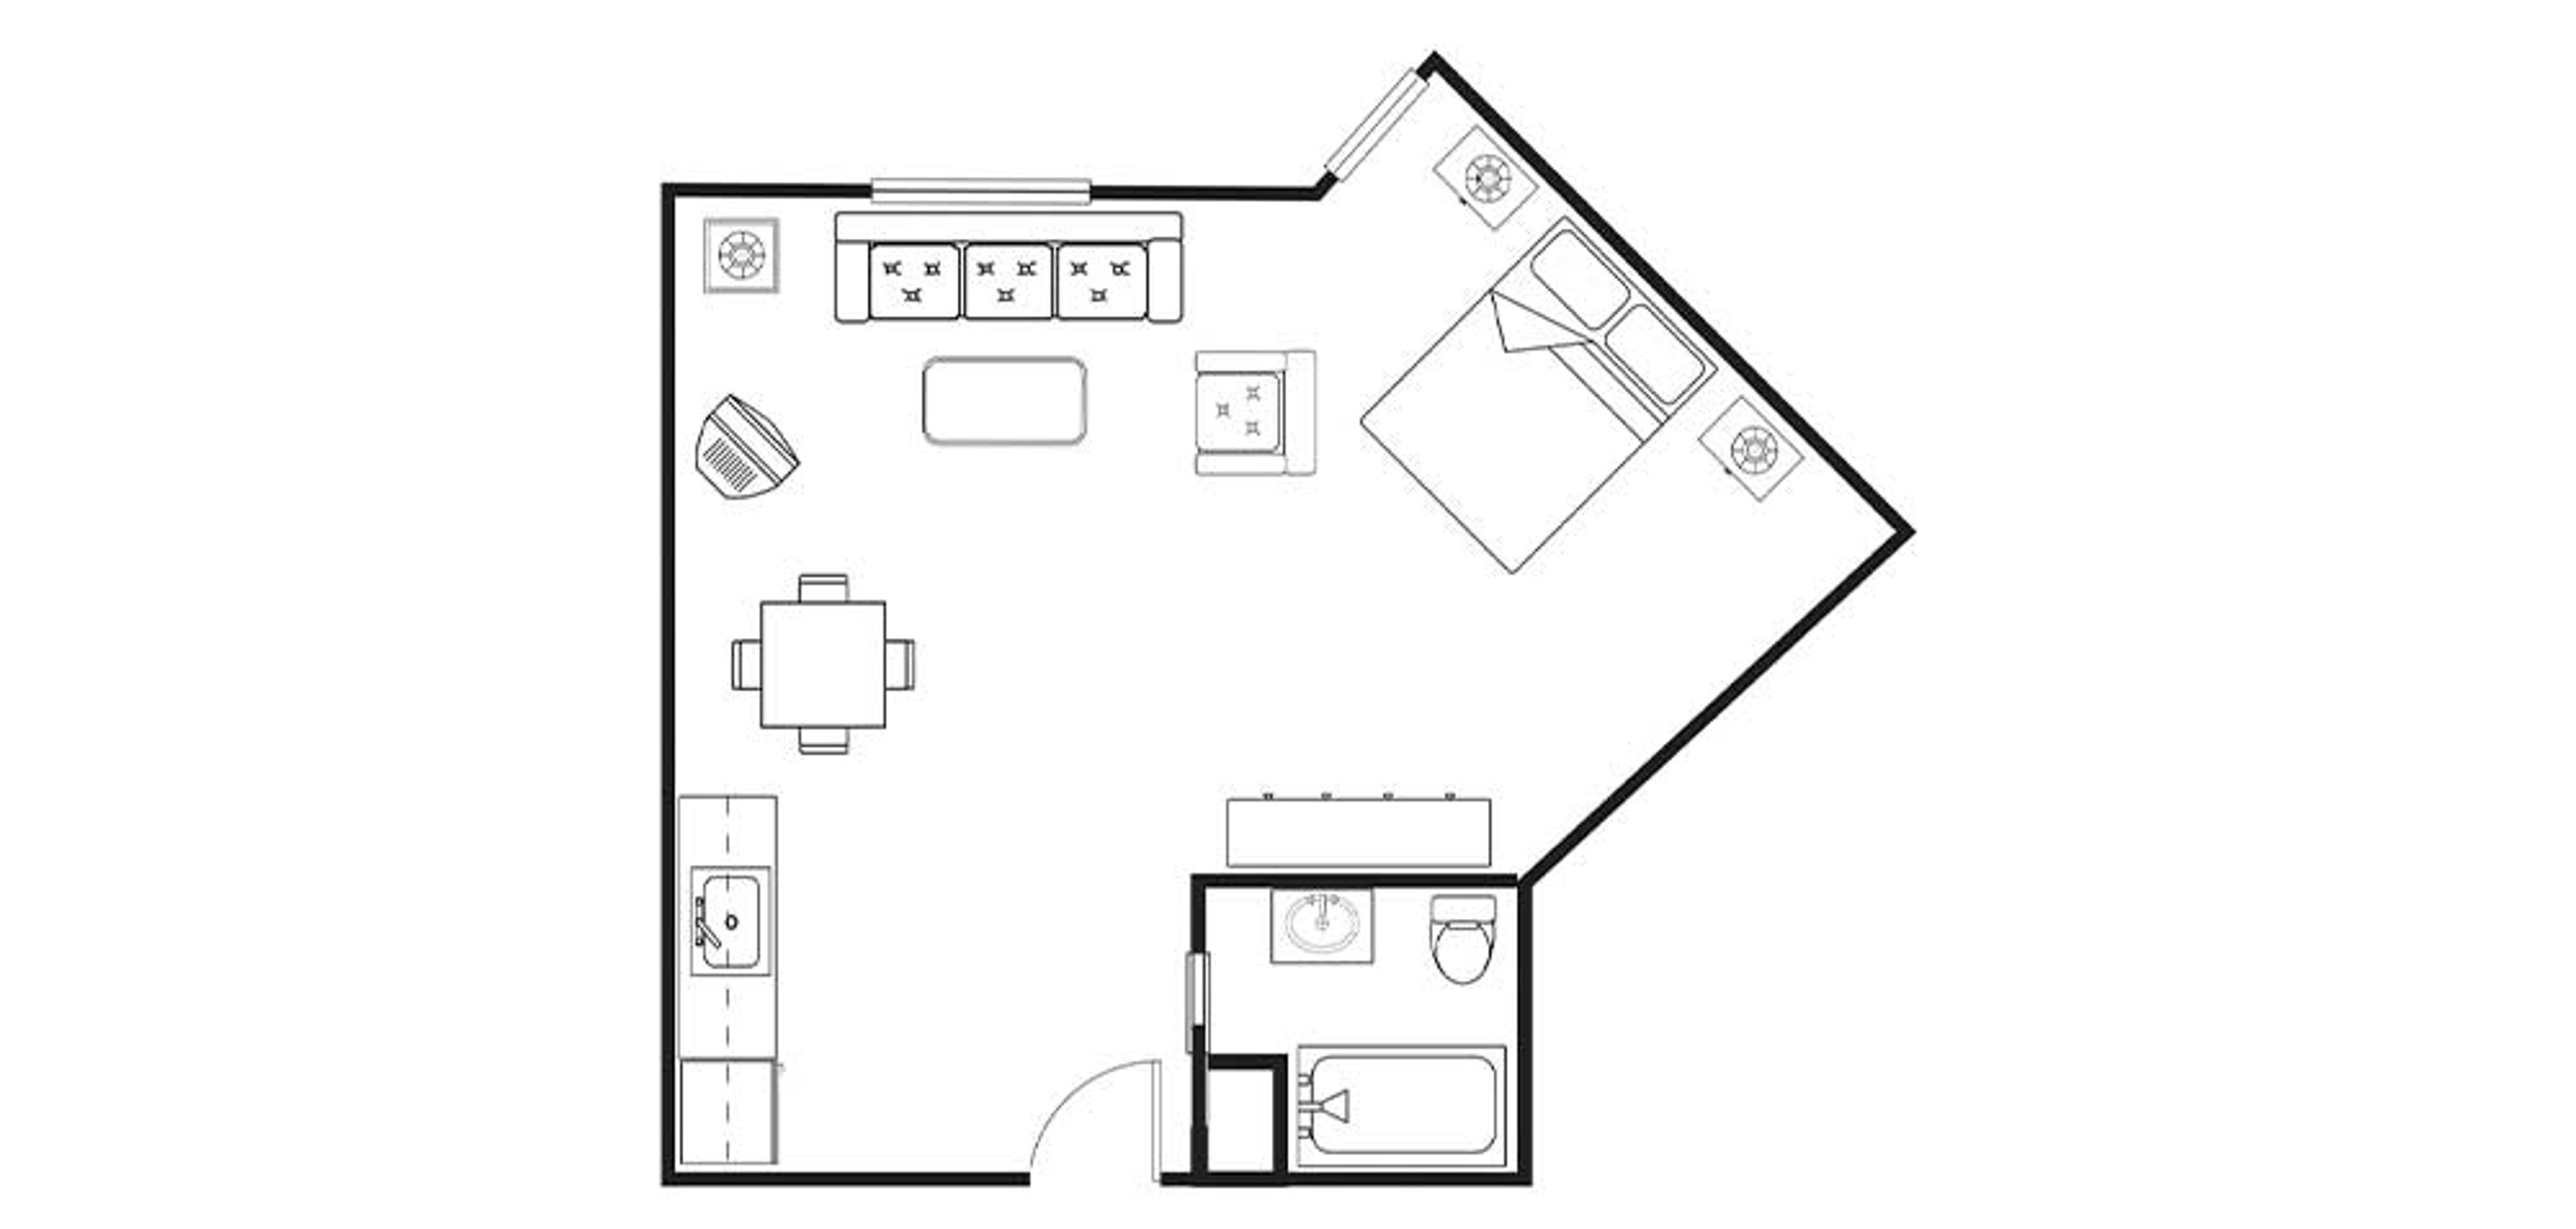 Floorplan - Redwood Heights - S3 Studio 382 sq. ft. Assisted Living